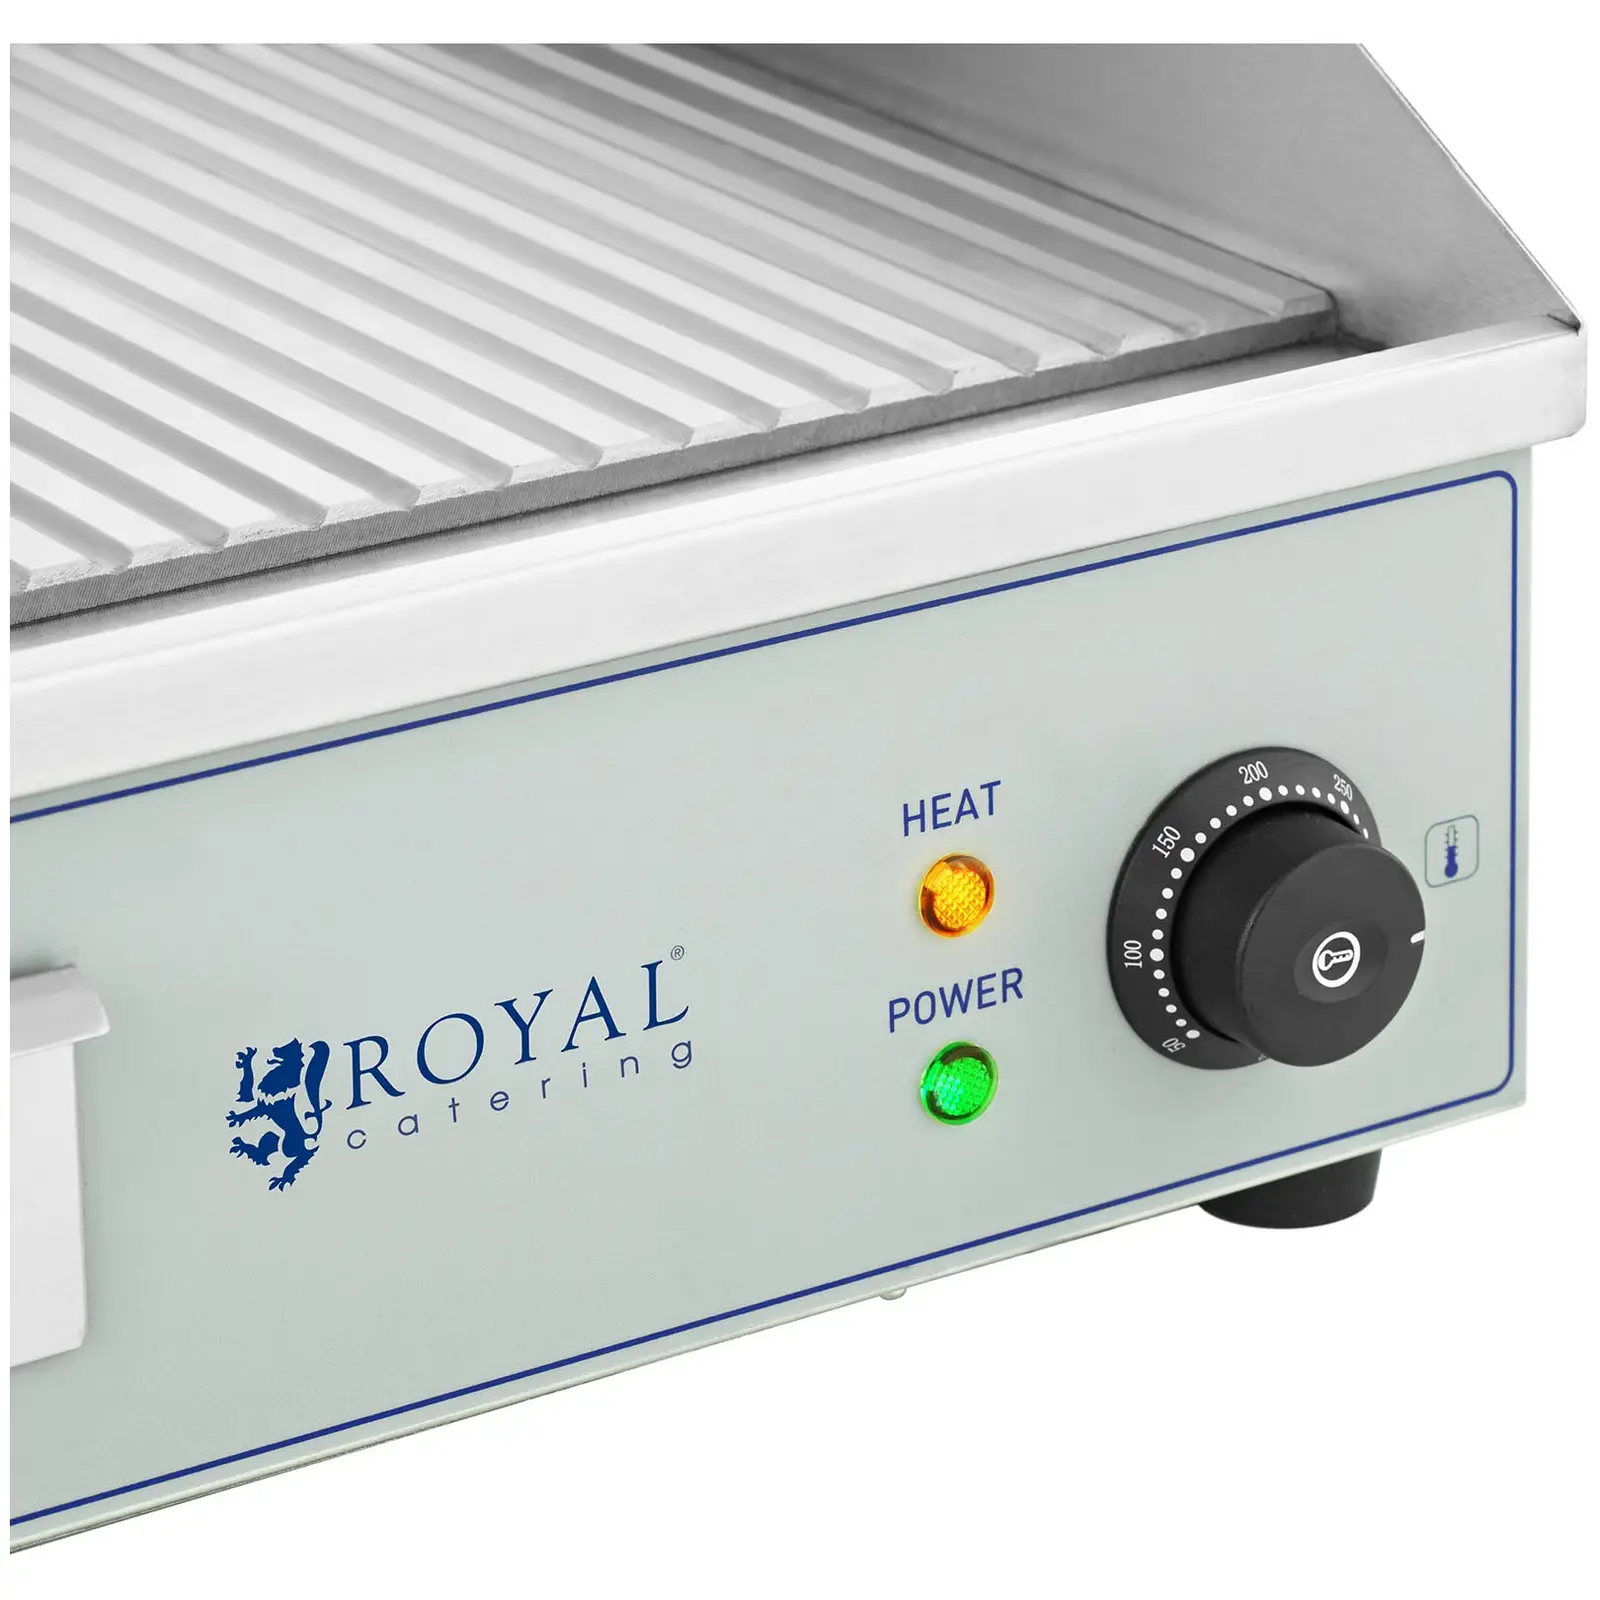 Dupla elekromos grill - 400 x 730 mm - Royal Catering - 2 x 2,200 W